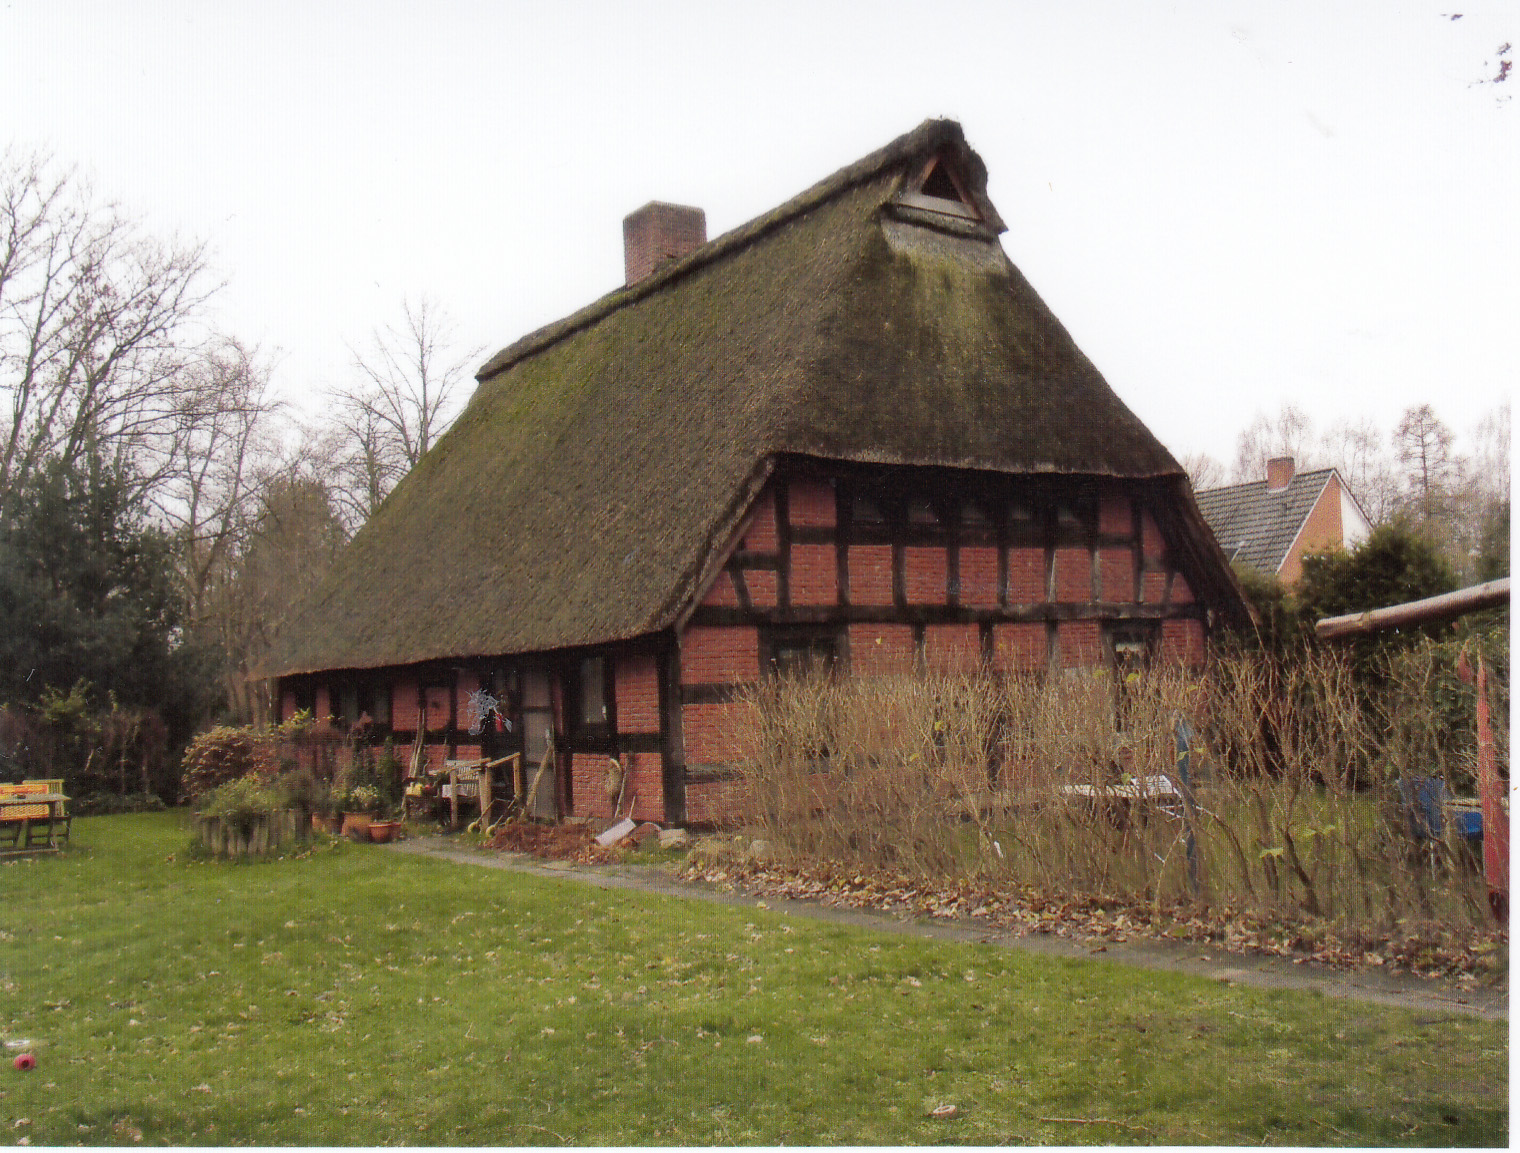 Häuslingsstelle in der Samtgemeinde Bruchhausen Vilsen - Schwarme (Großborstel) (Kreismuseum Syke CC BY-NC-SA)